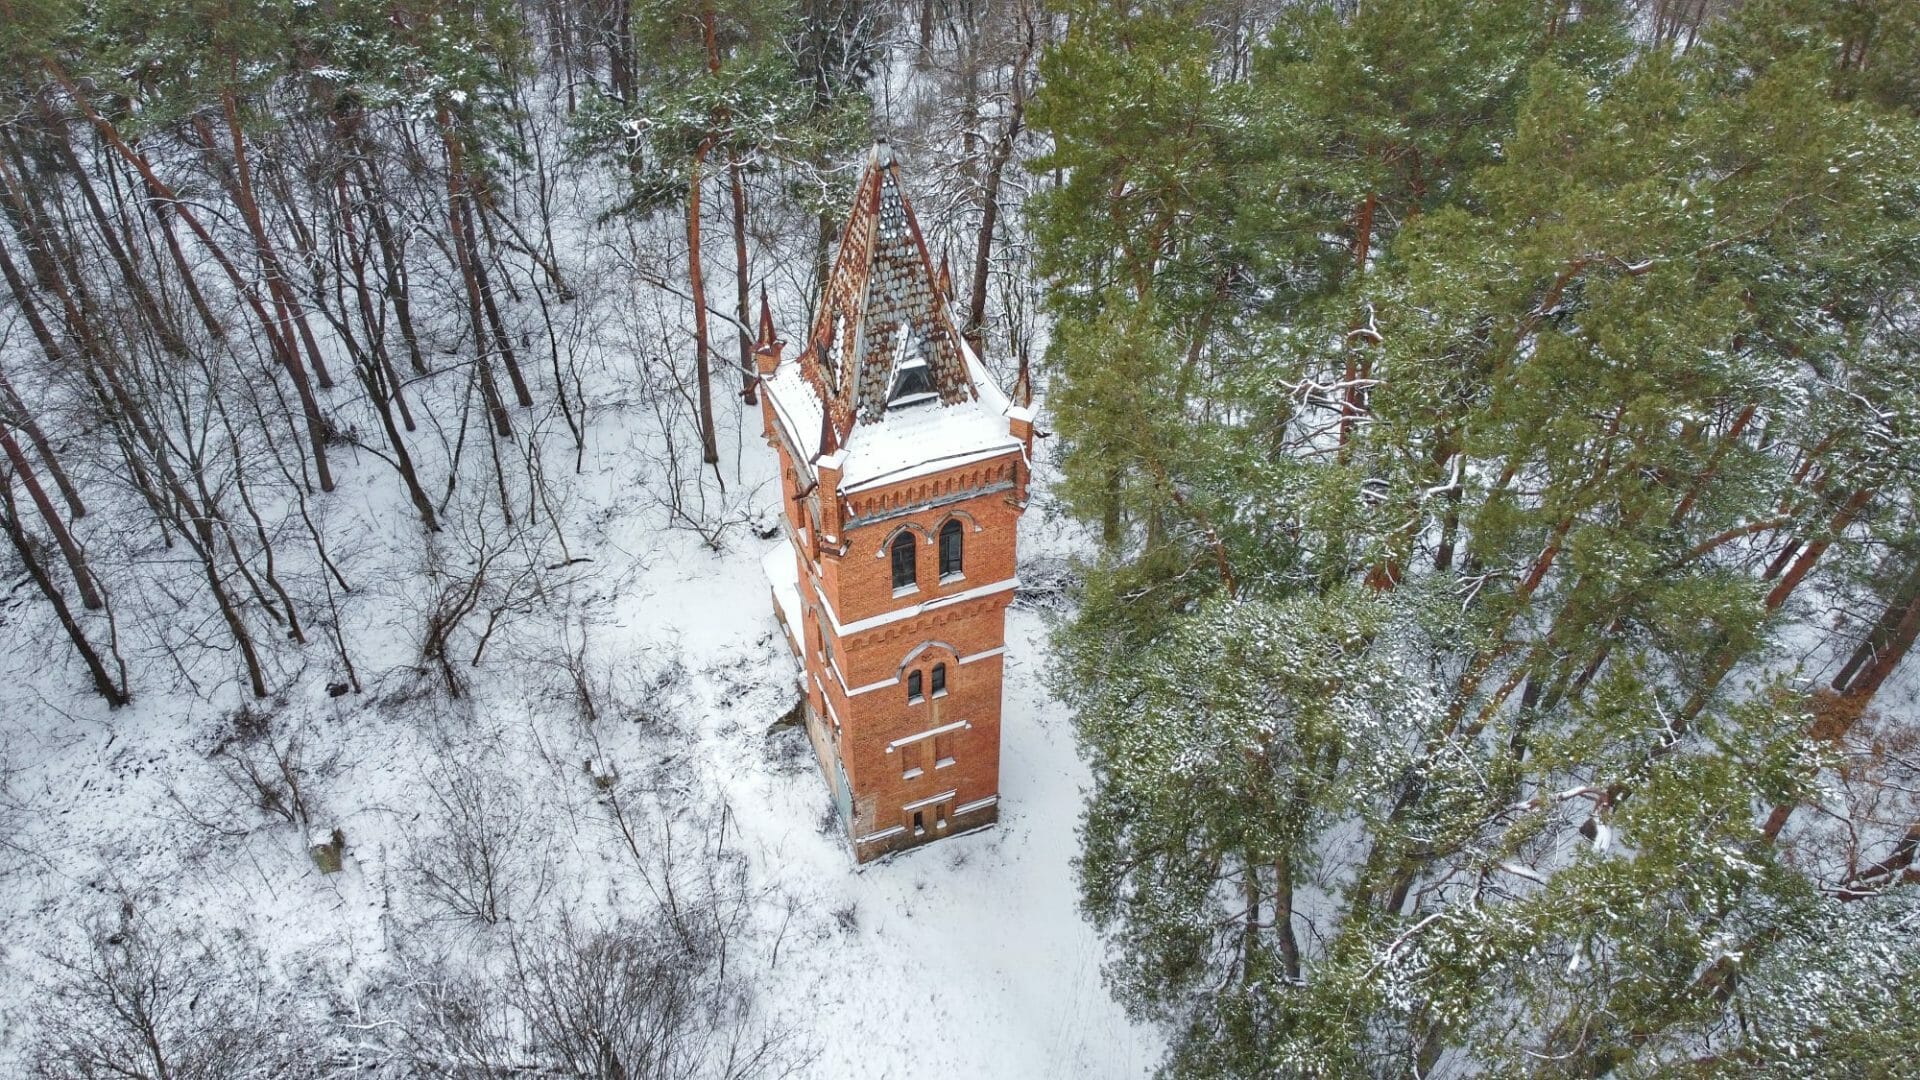 The 19th century’s water tower of the Kharytonenkos estate